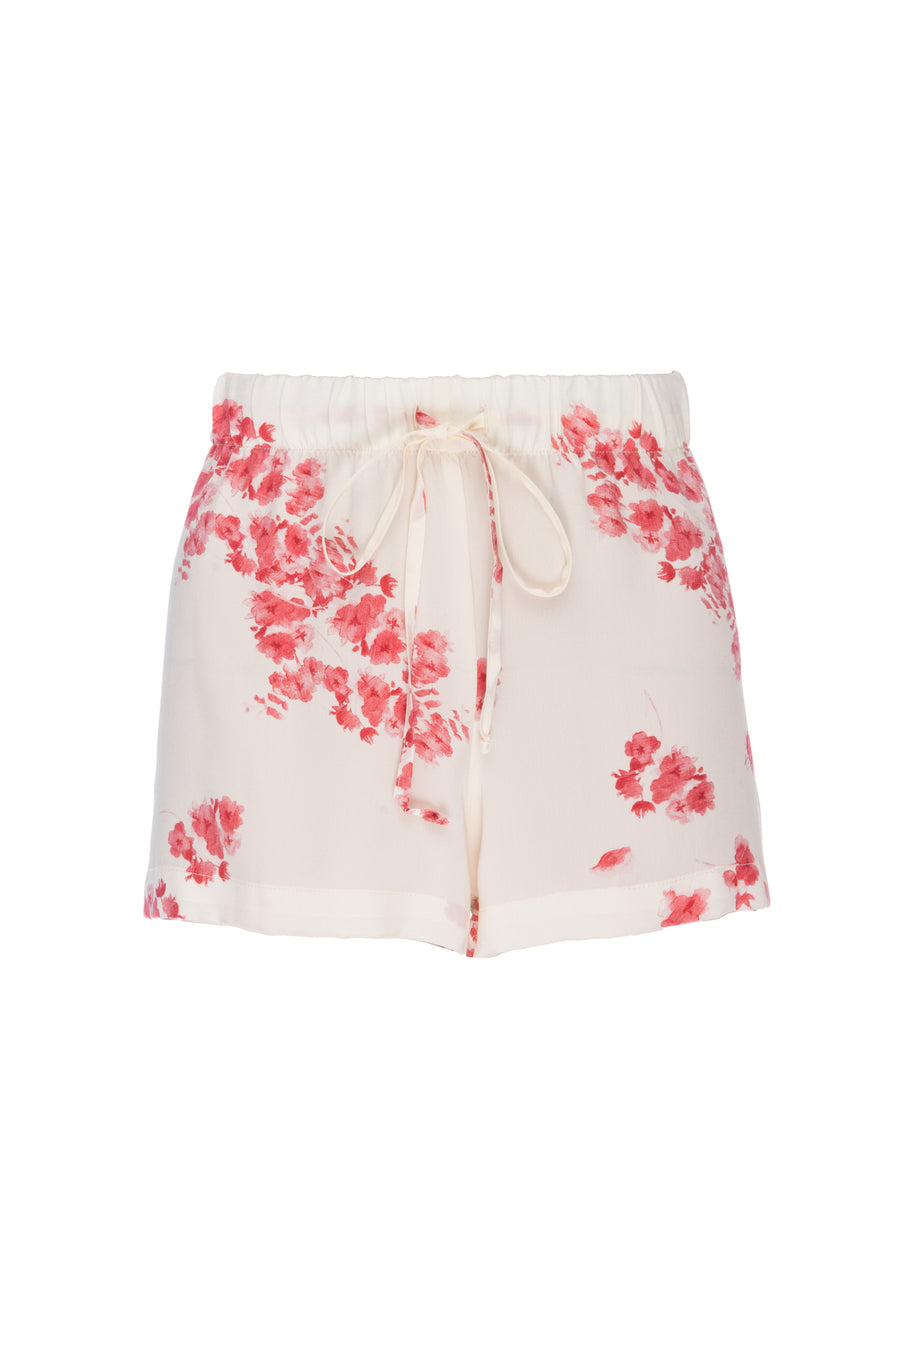 Silk Crepe De Chine PJ Shorts: Cream and Crimson Daisy Print